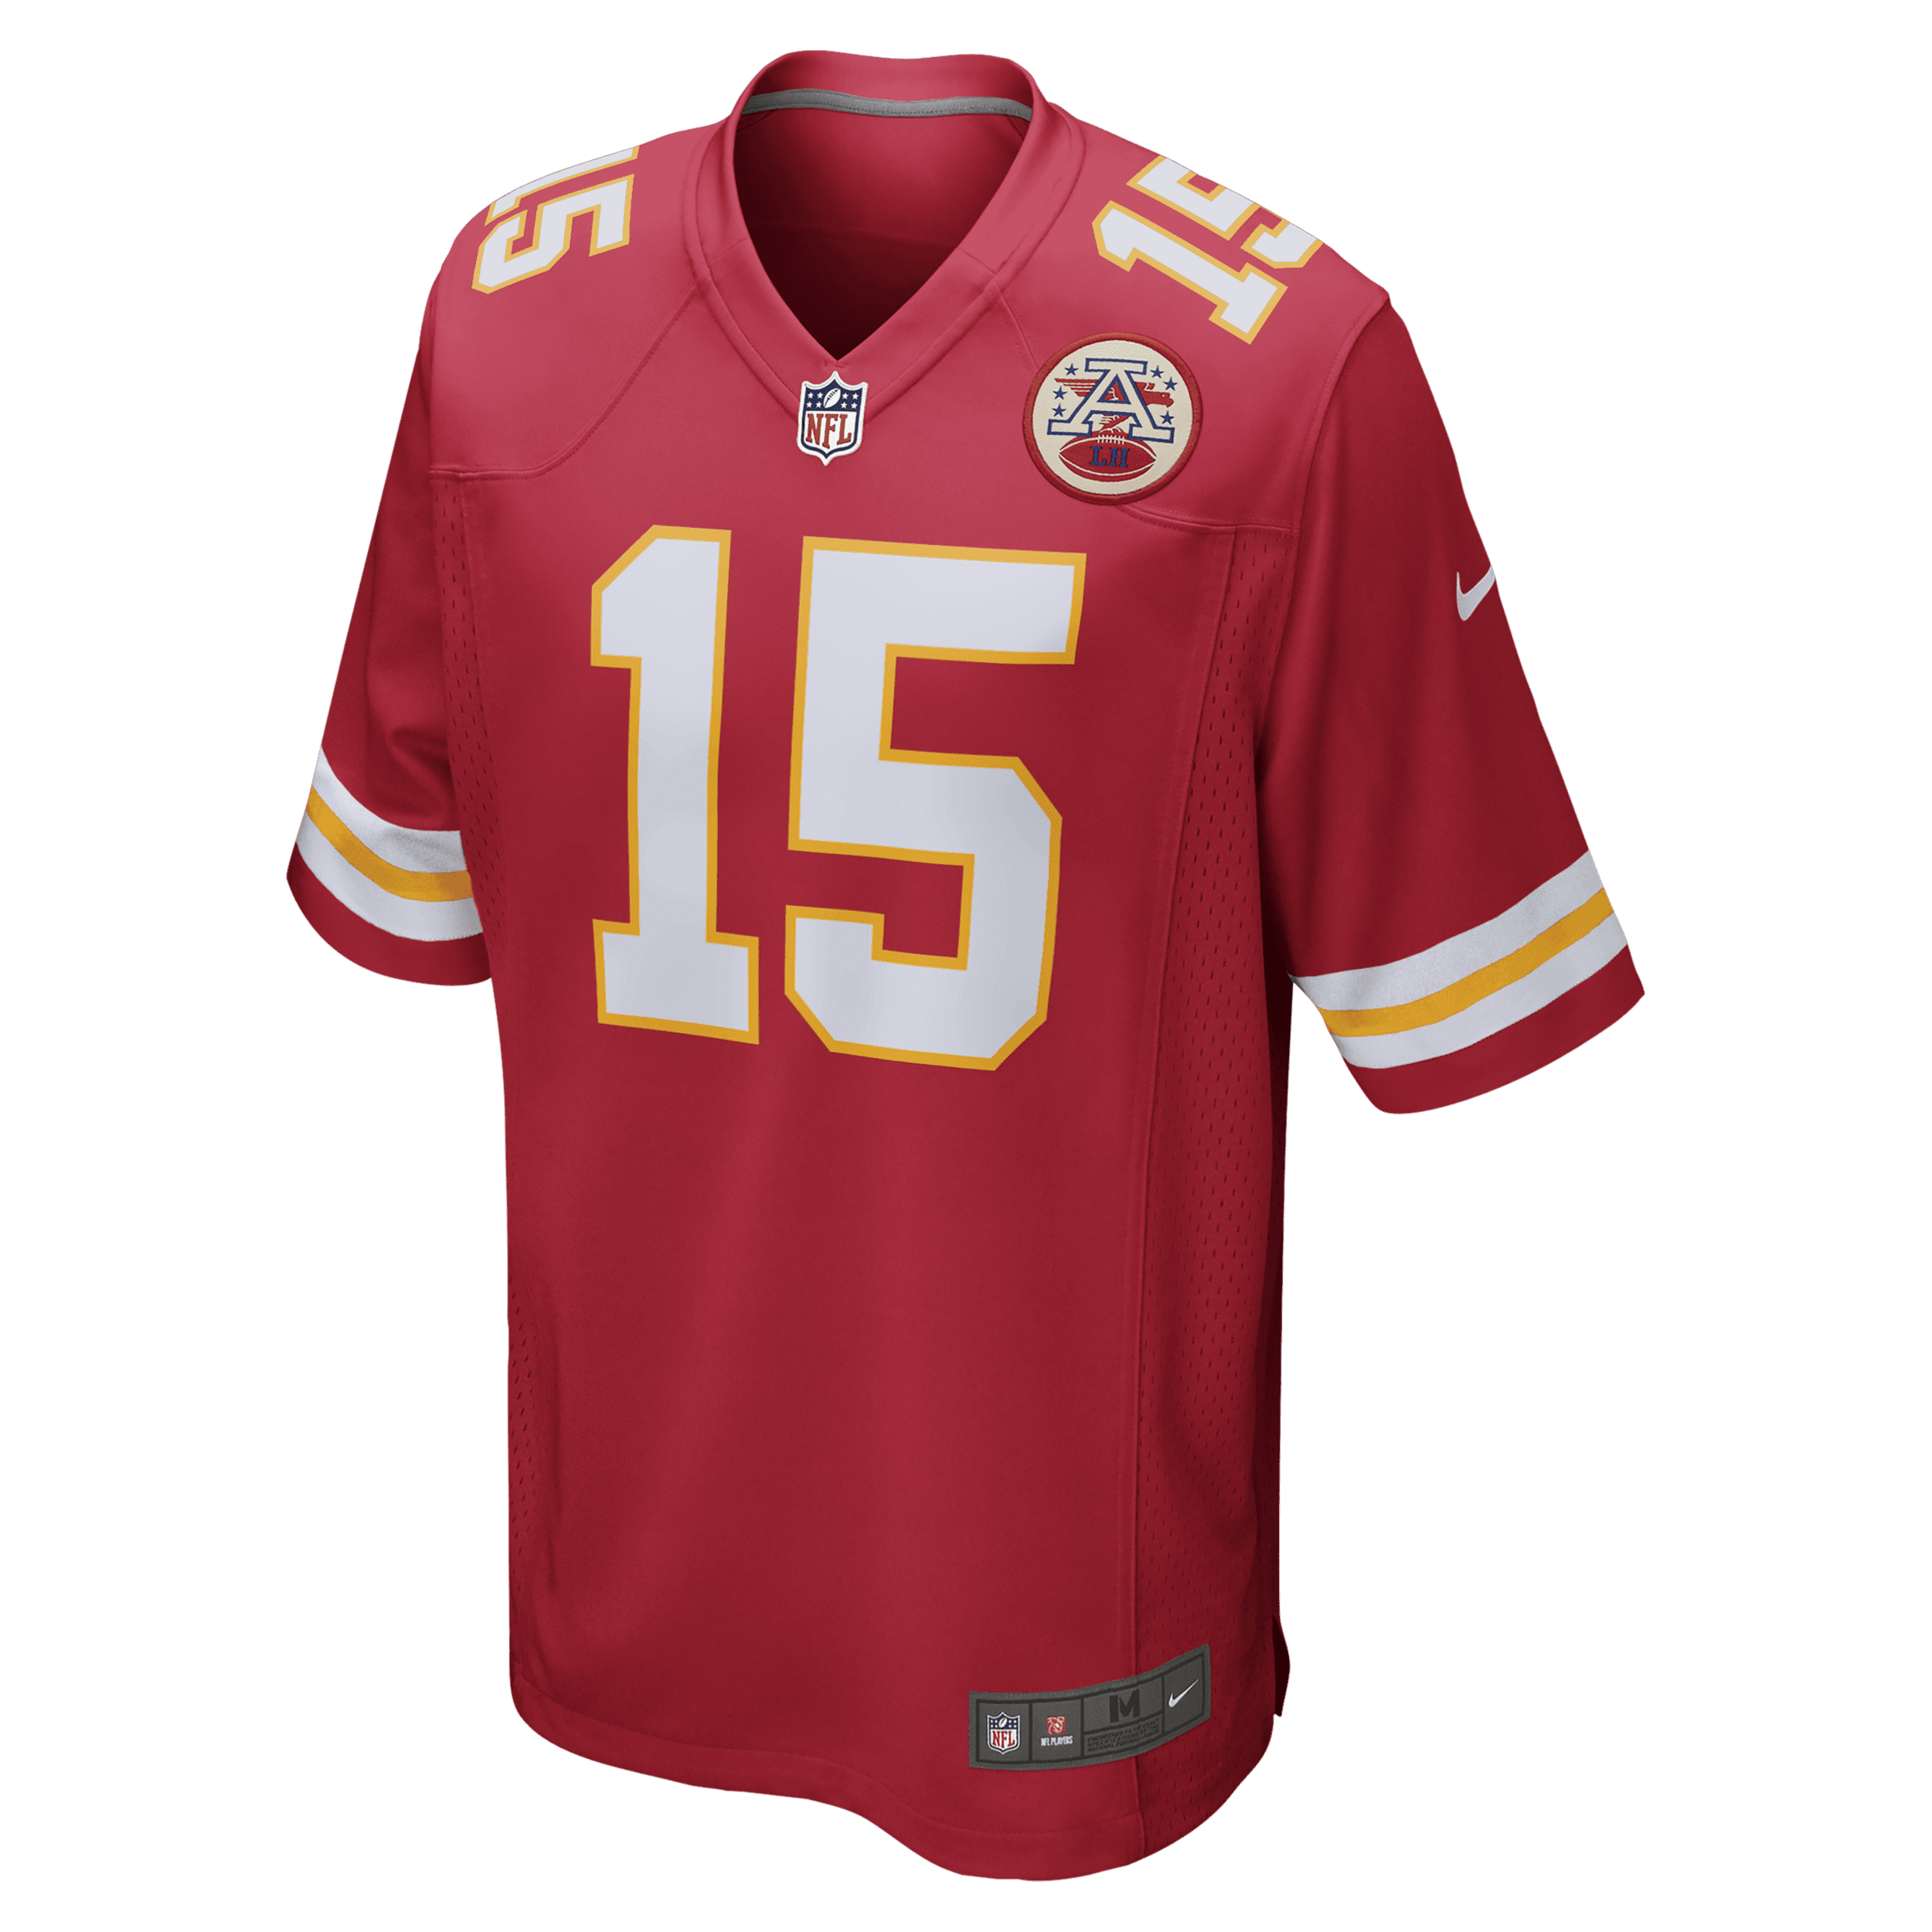 Nike NFL Kansas City Chiefs (Patrick Mahomes) American-football-wedstrijdjersey voor heren - Rood